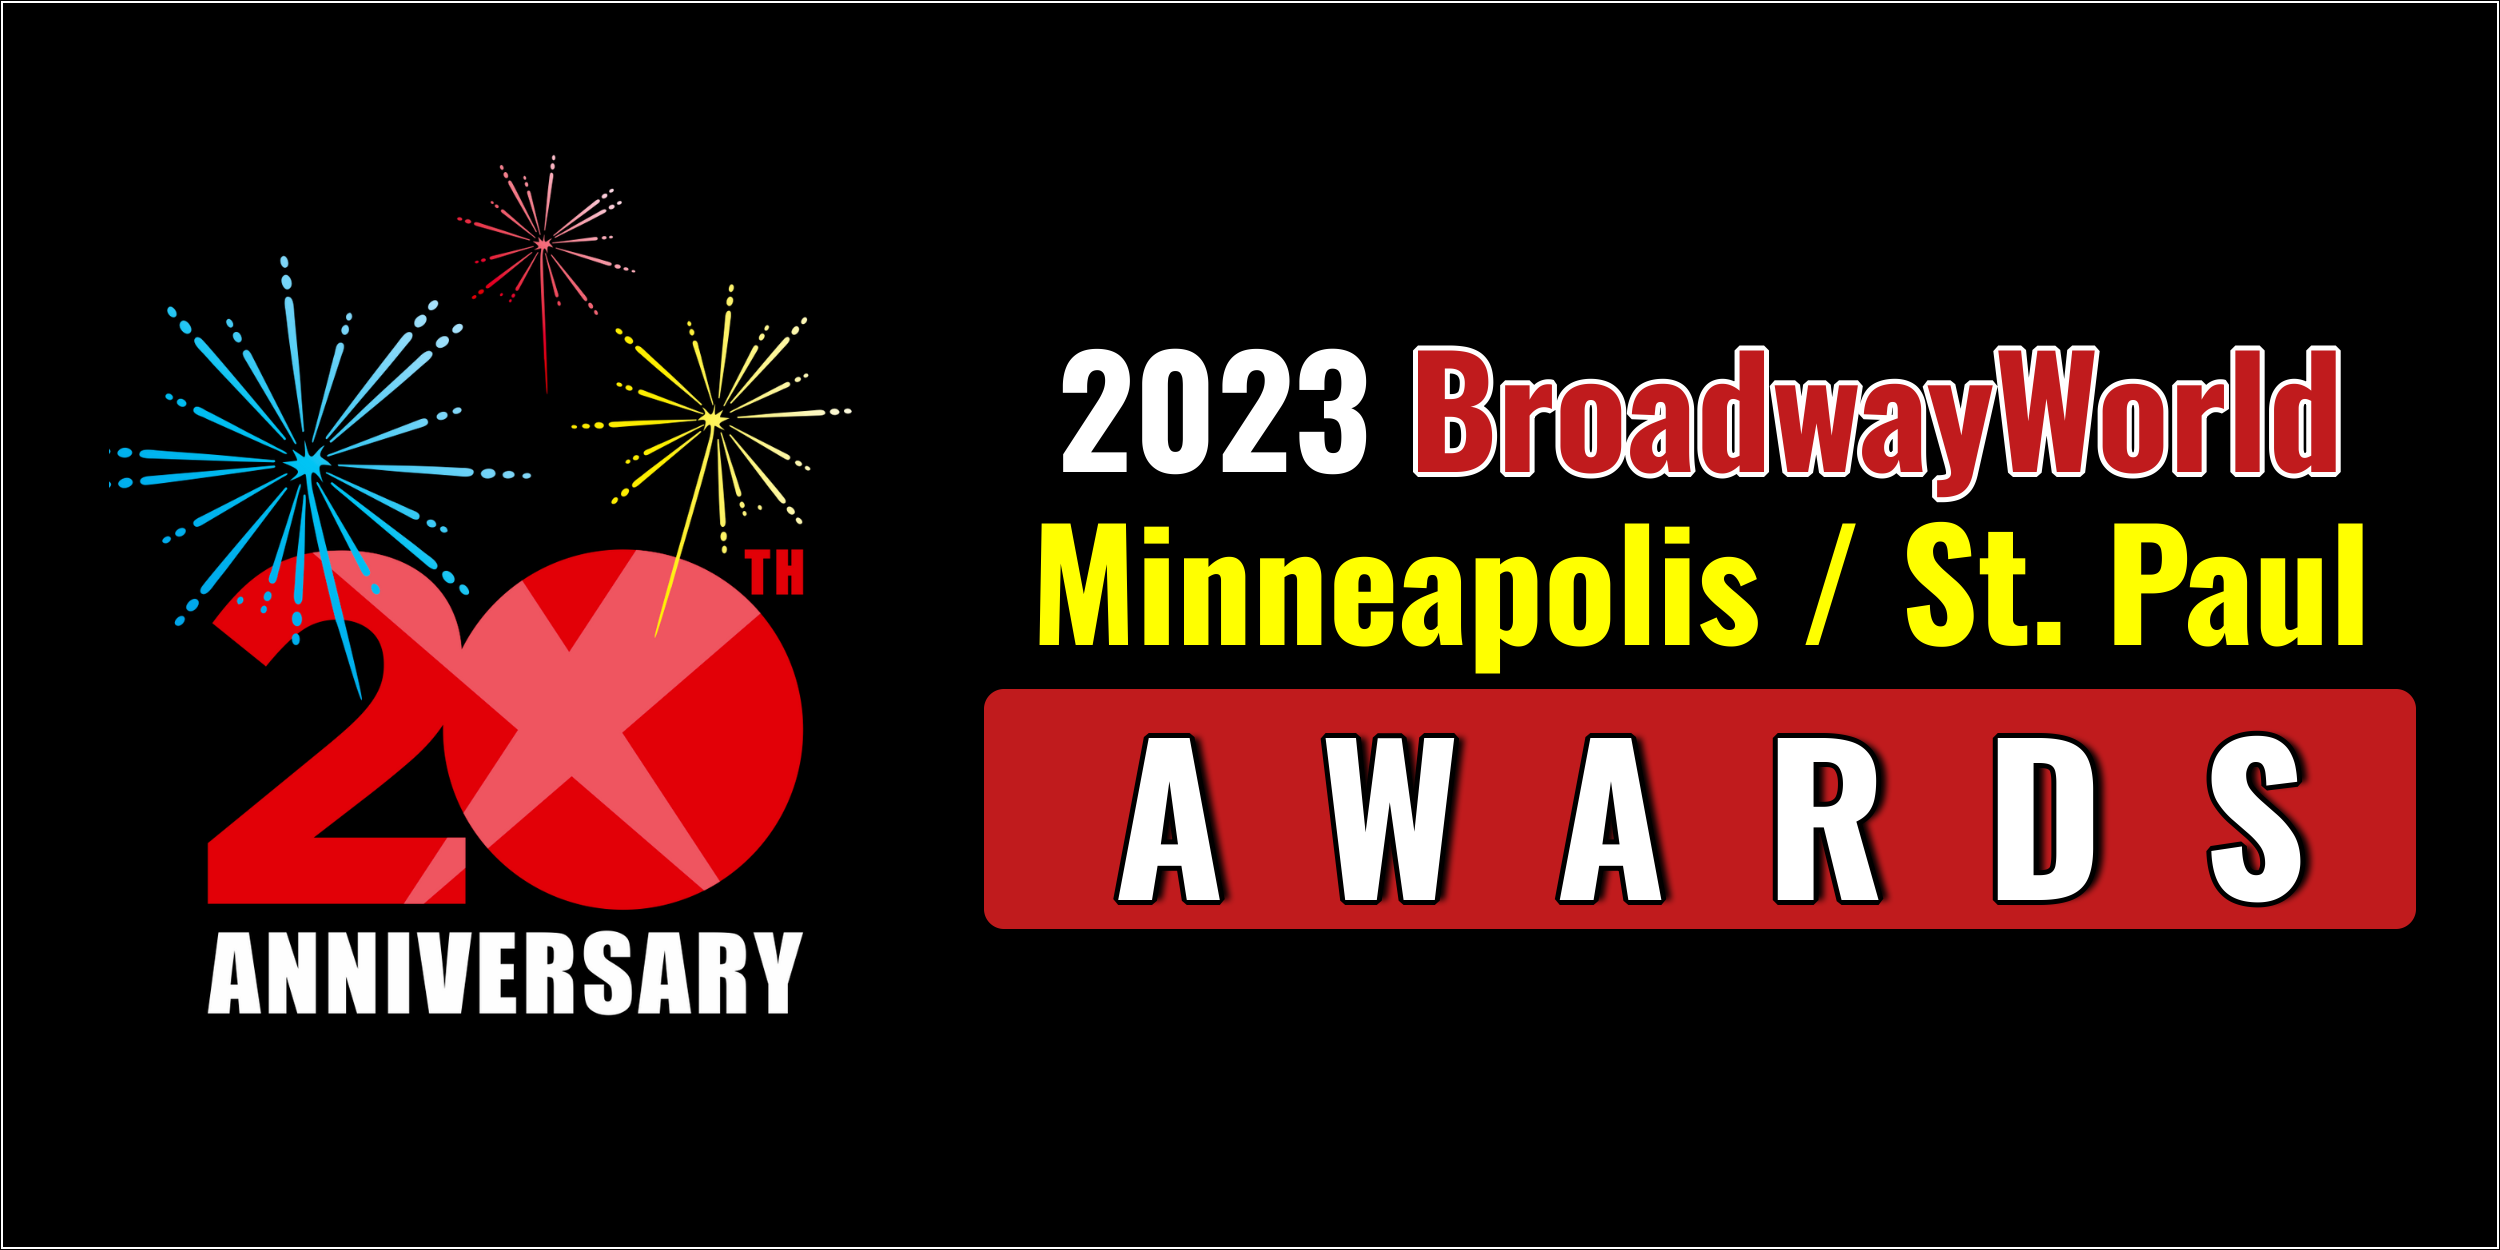 Latest Standings Announced For The 2023 BroadwayWorld Minneapolis / St. Paul Awards; MURDE Photo